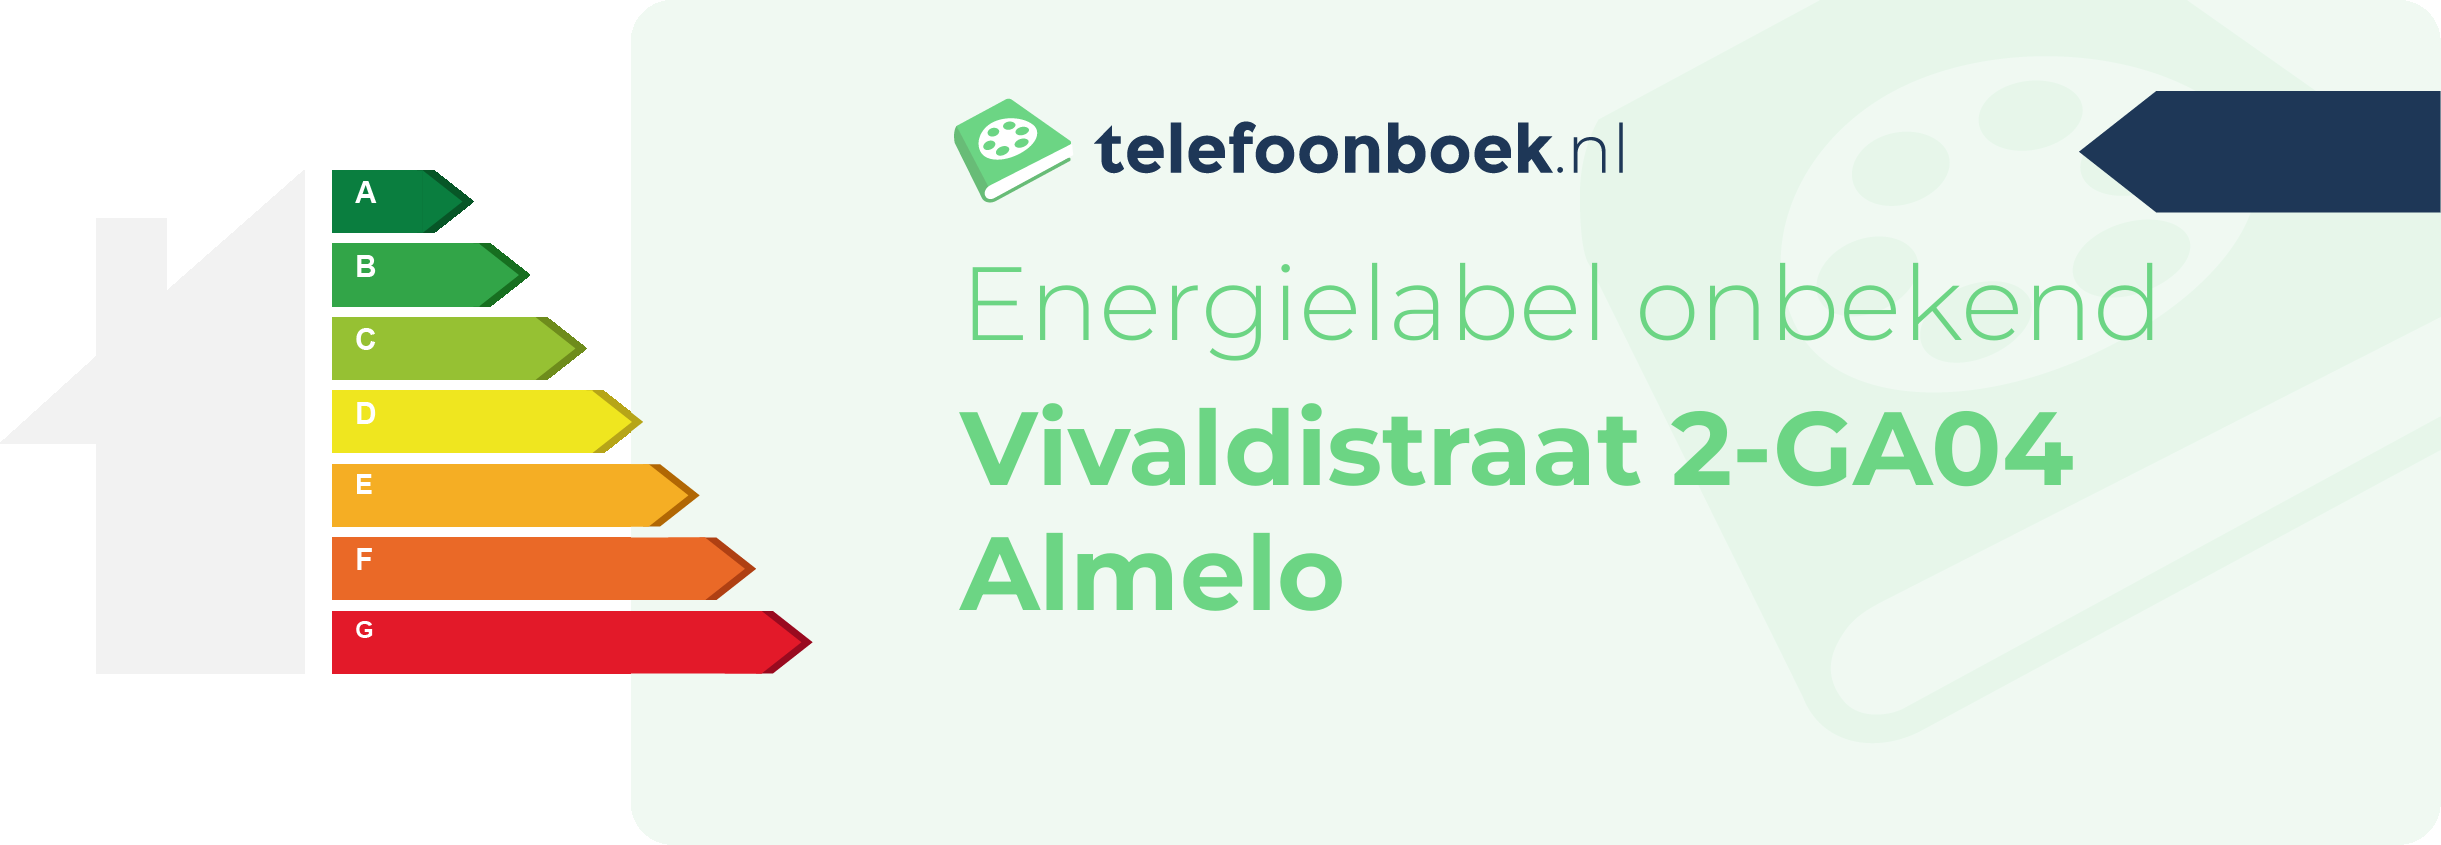 Energielabel Vivaldistraat 2-GA04 Almelo